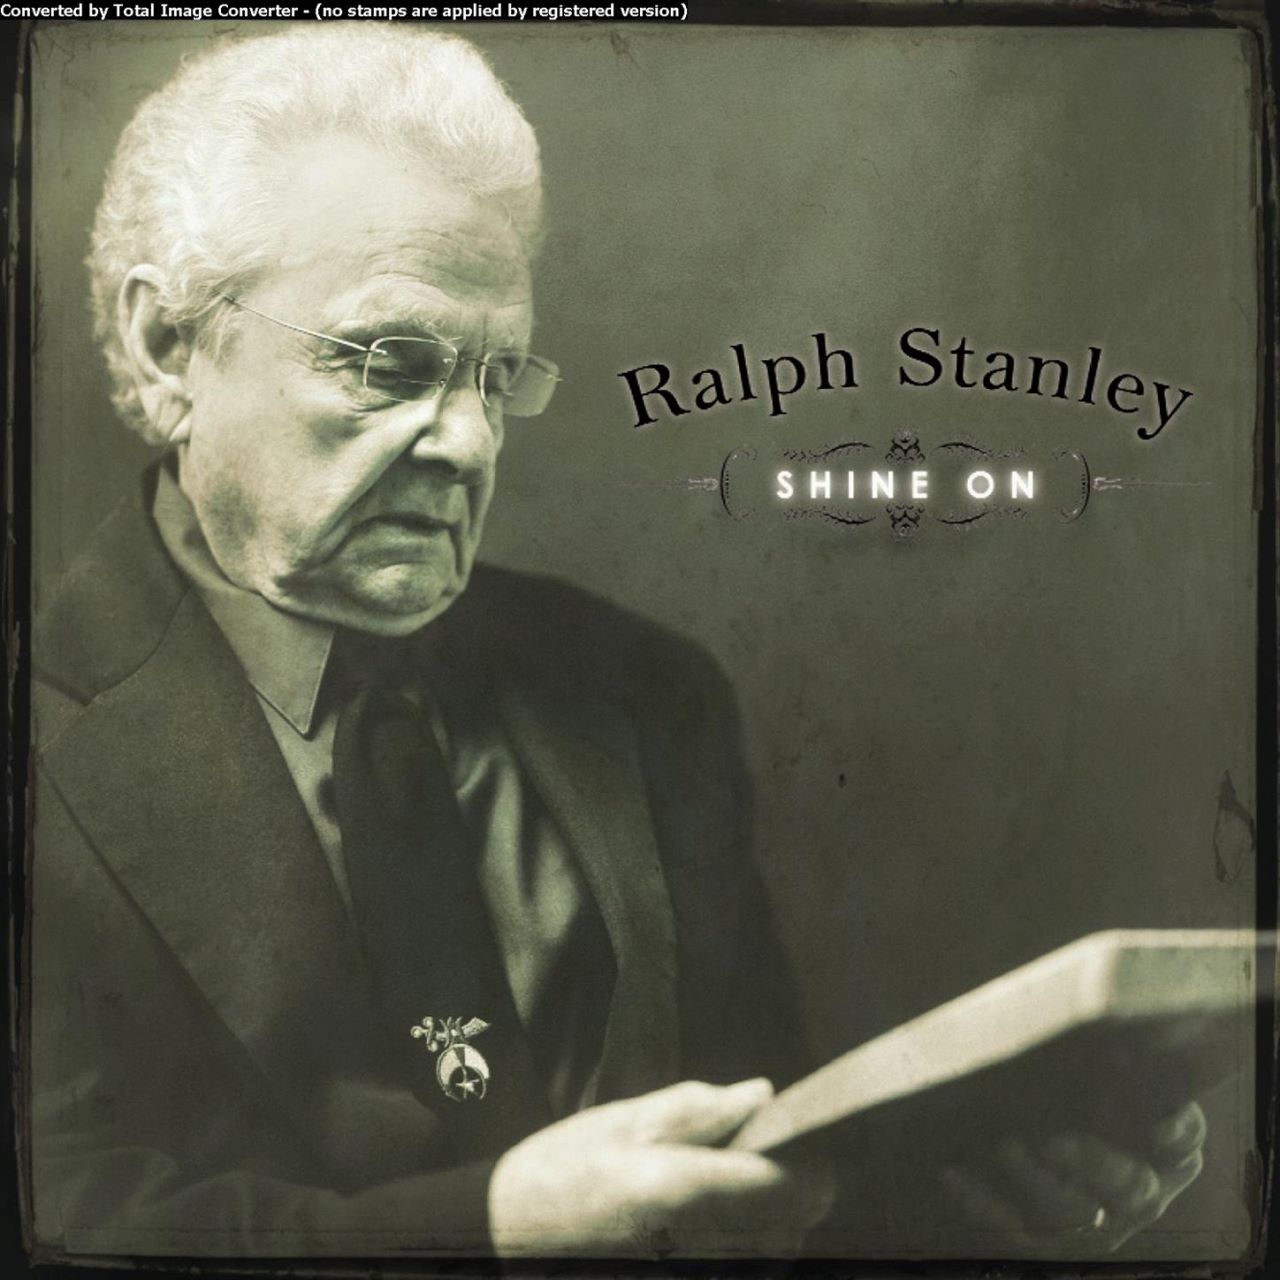 Ralph Stanley - Shine On cover album